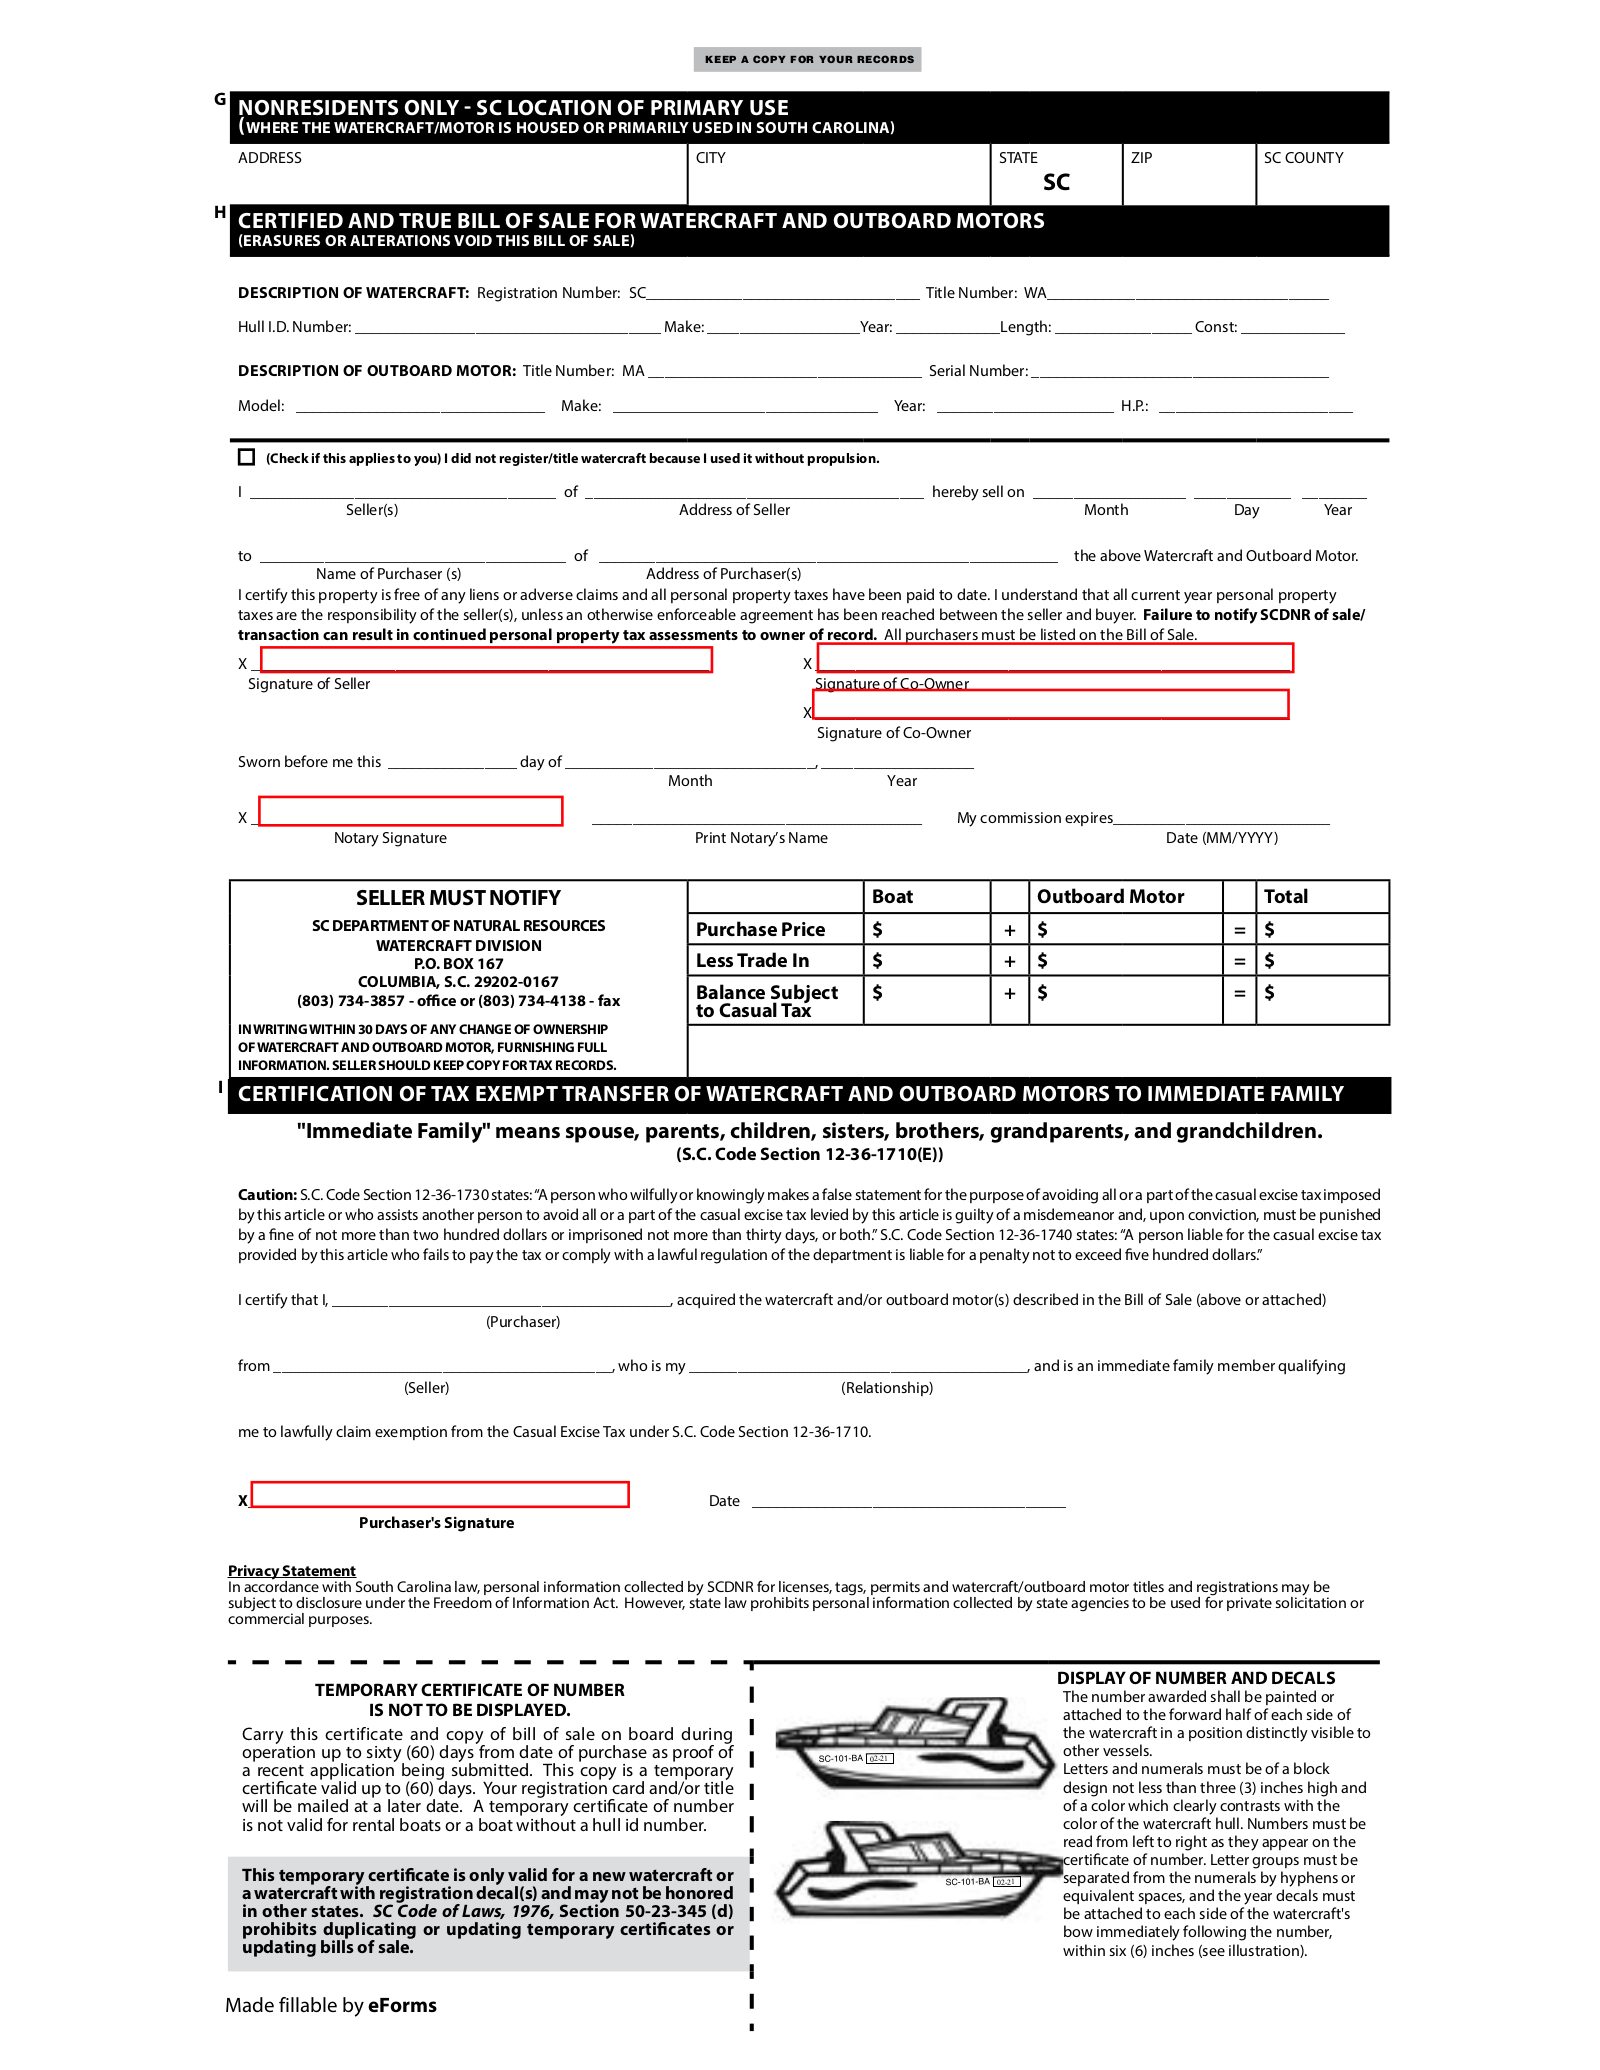 South Carolina Boat Bill of Sale Form